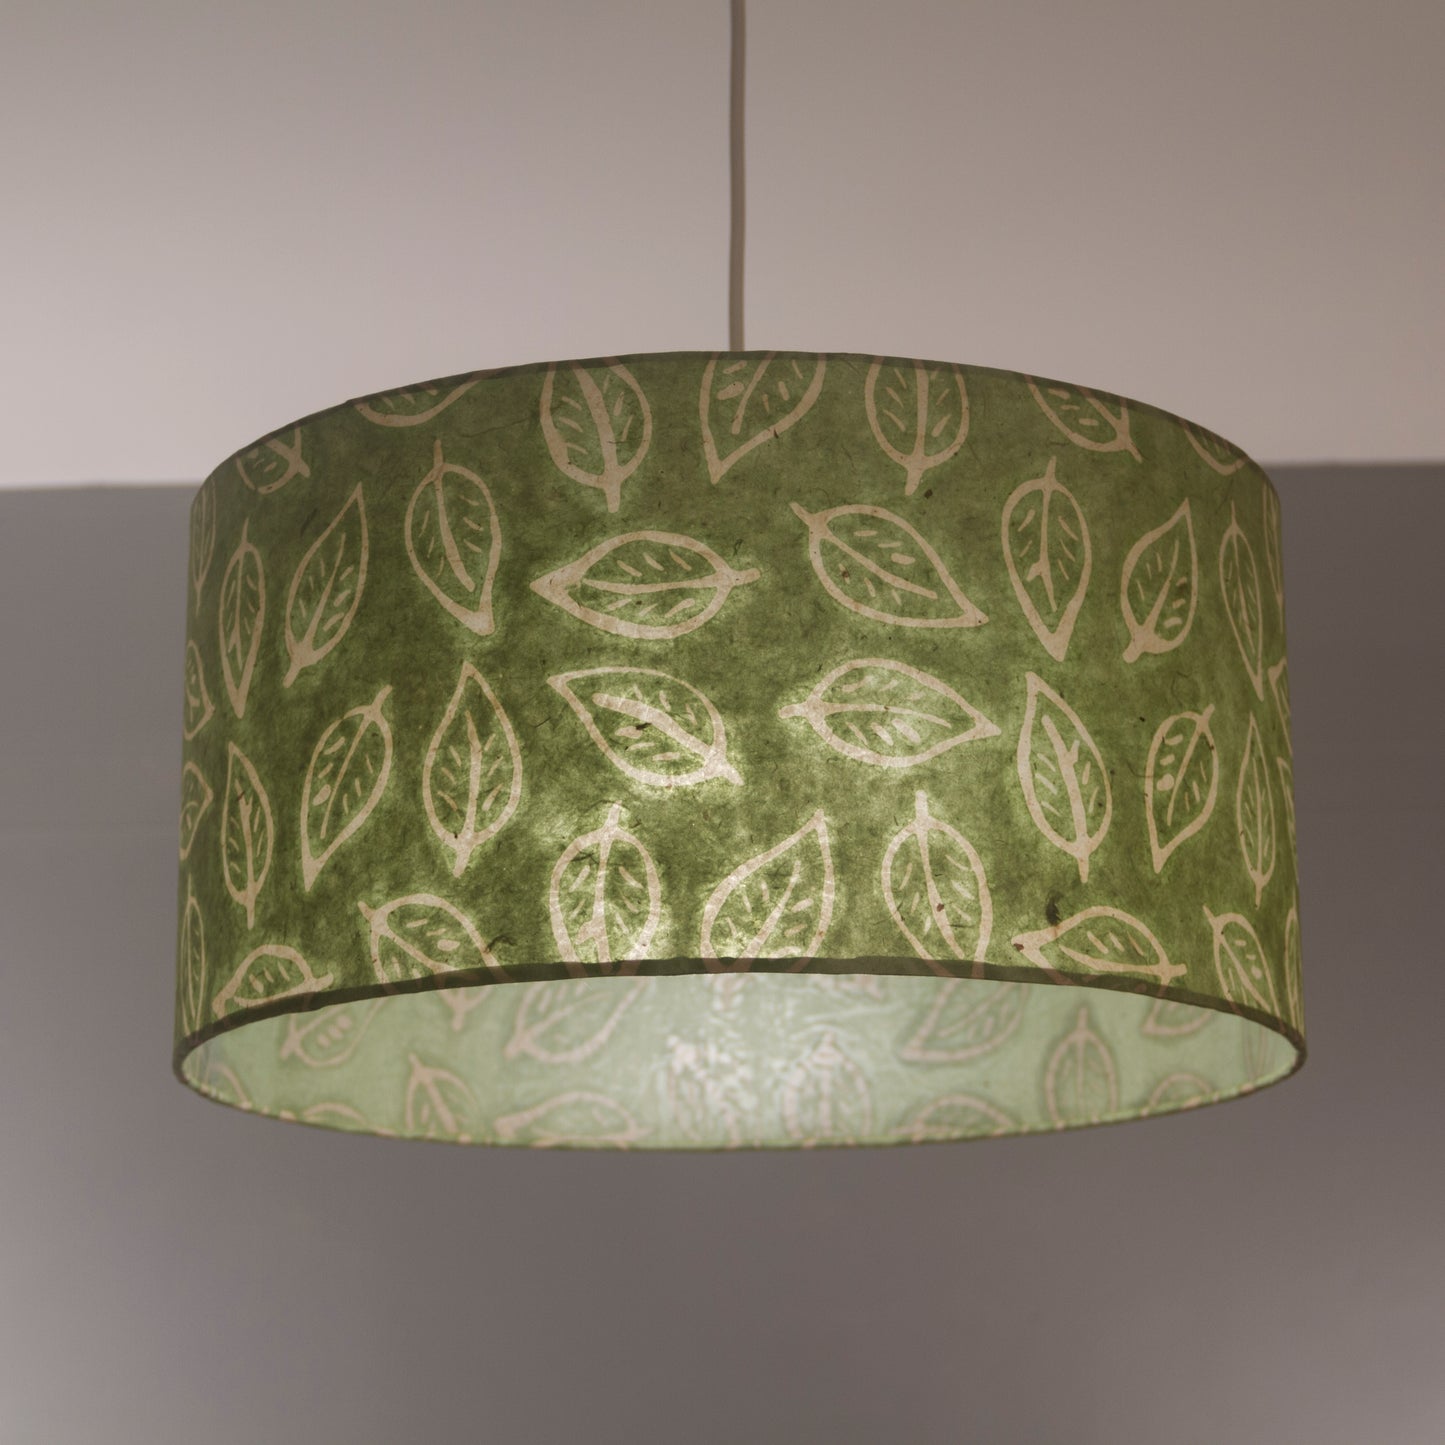 2 Tier Lamp Shade - P29 - Batik Leaf on Green, 30cm x 20cm & 20cm x 15cm